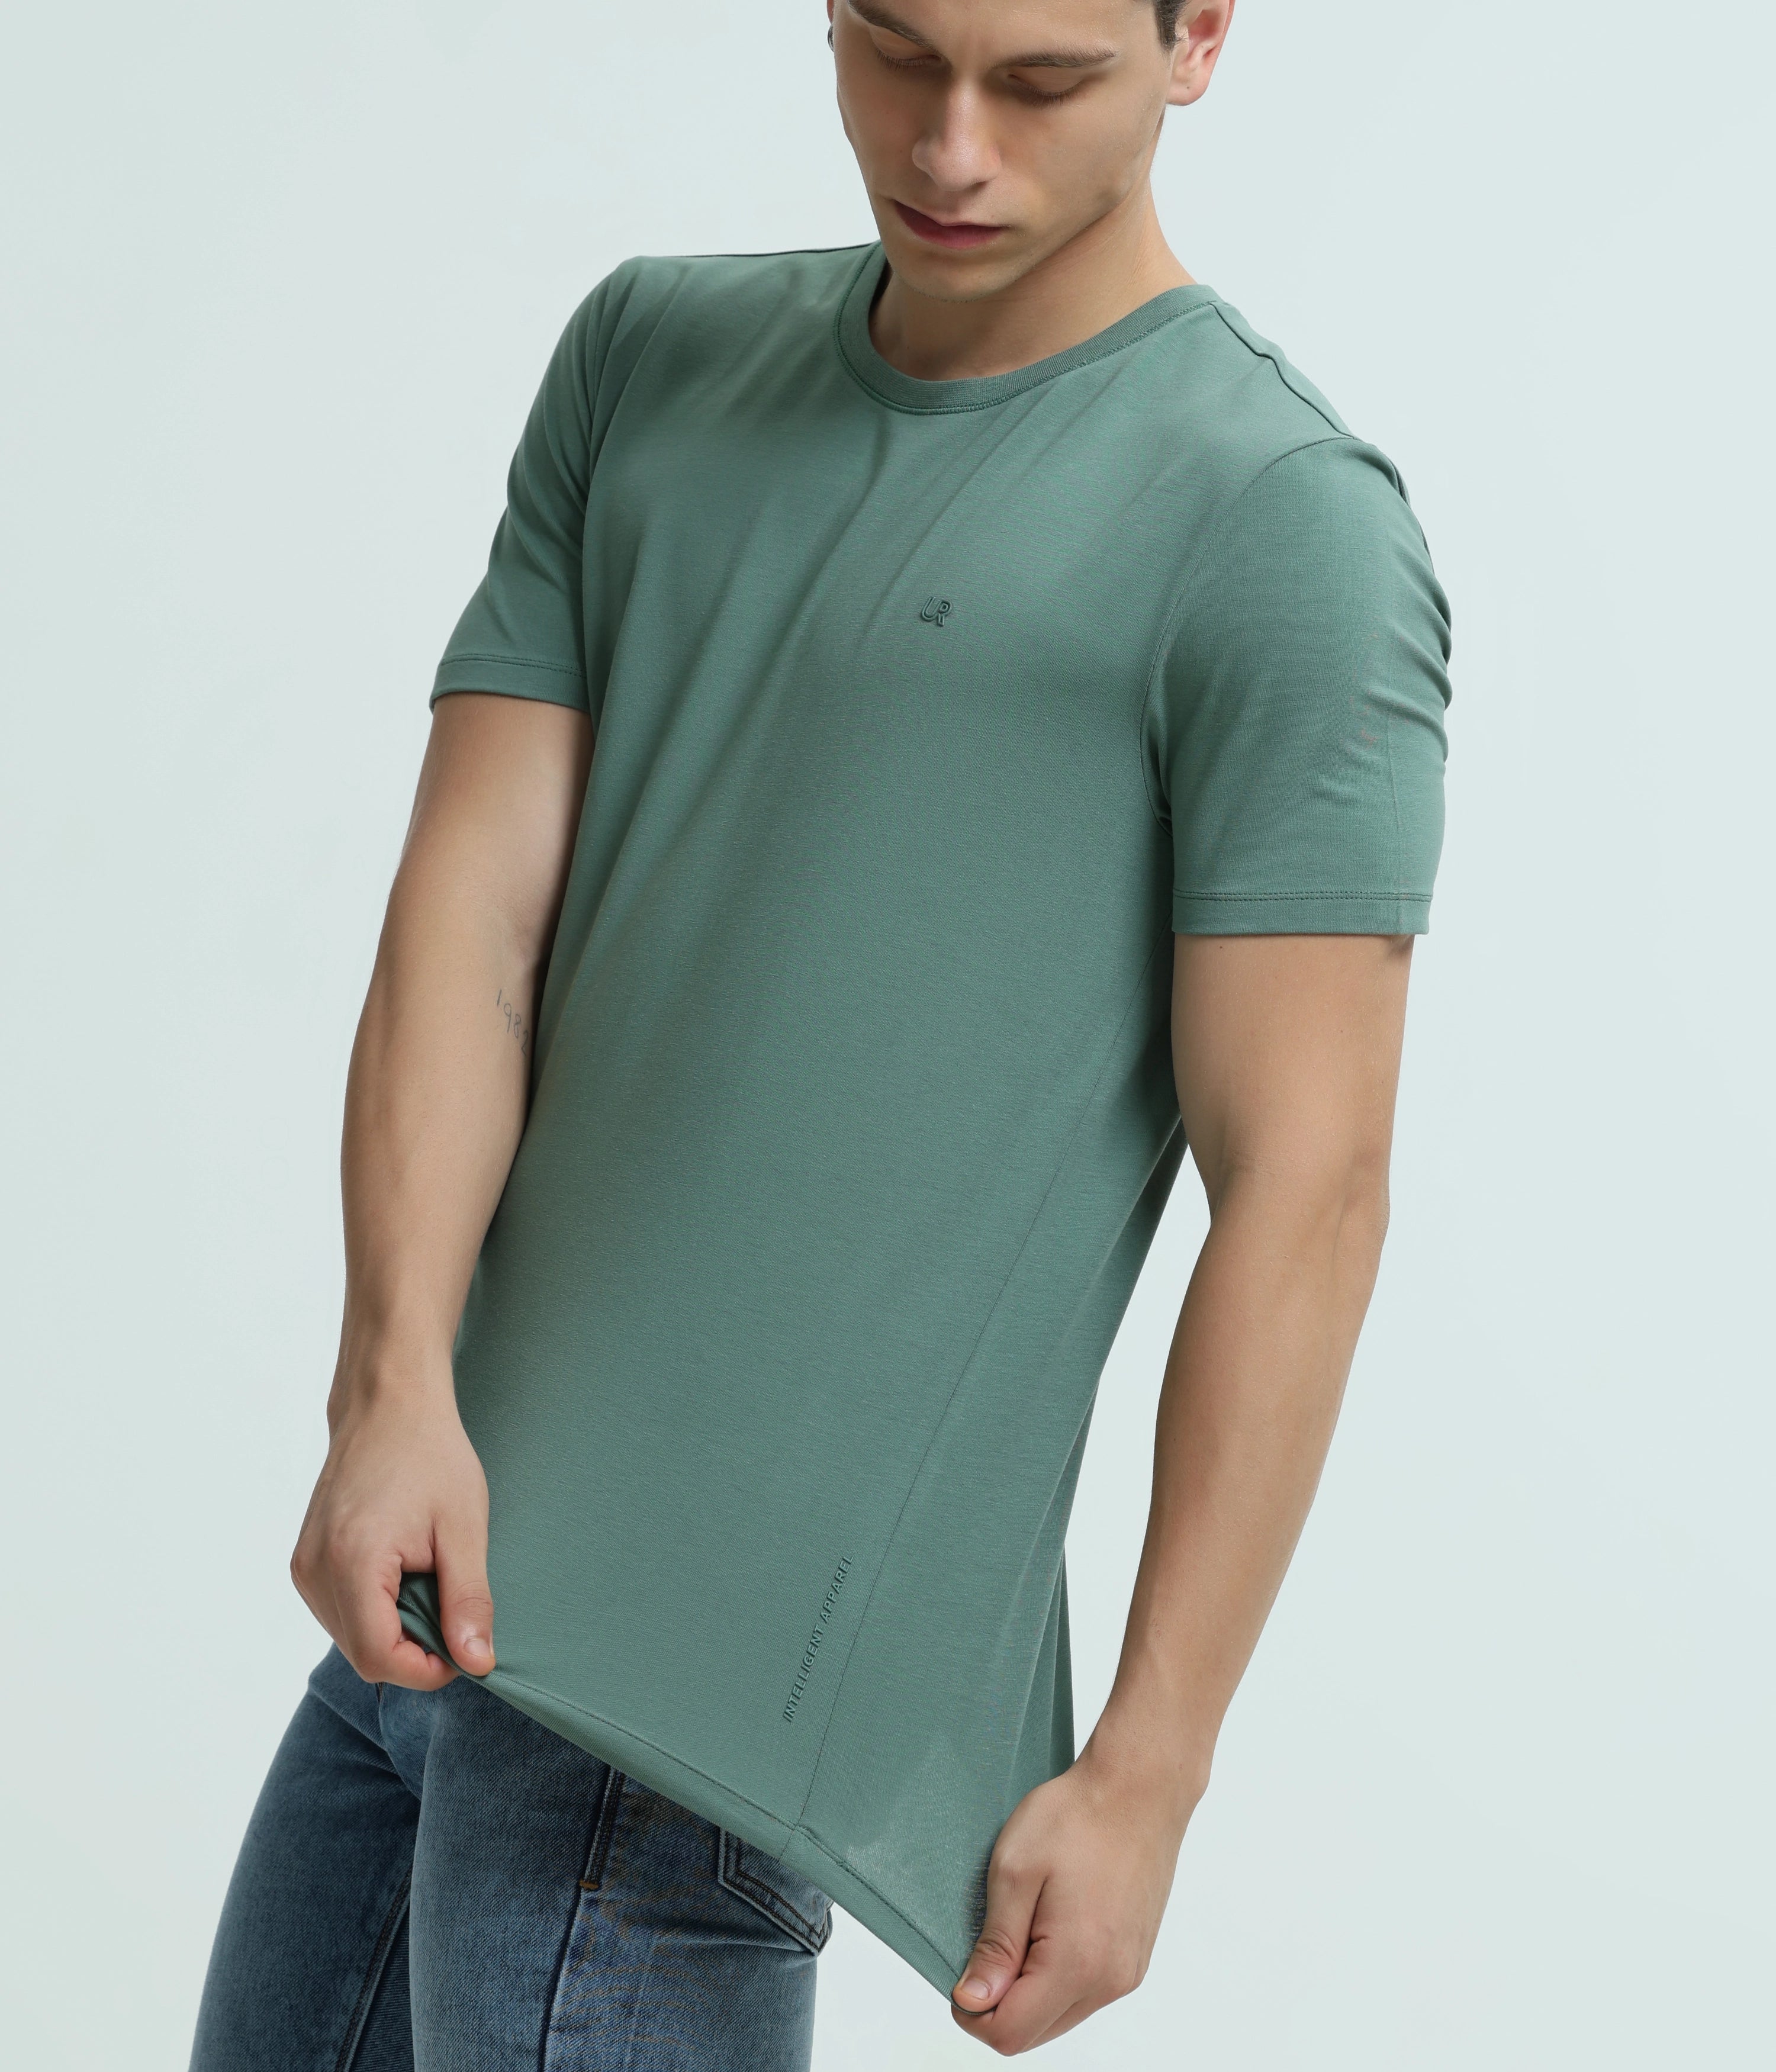 Simple Green Simple Green Turms T-Shirts: Anti-Stain & Anti-Odor URturms